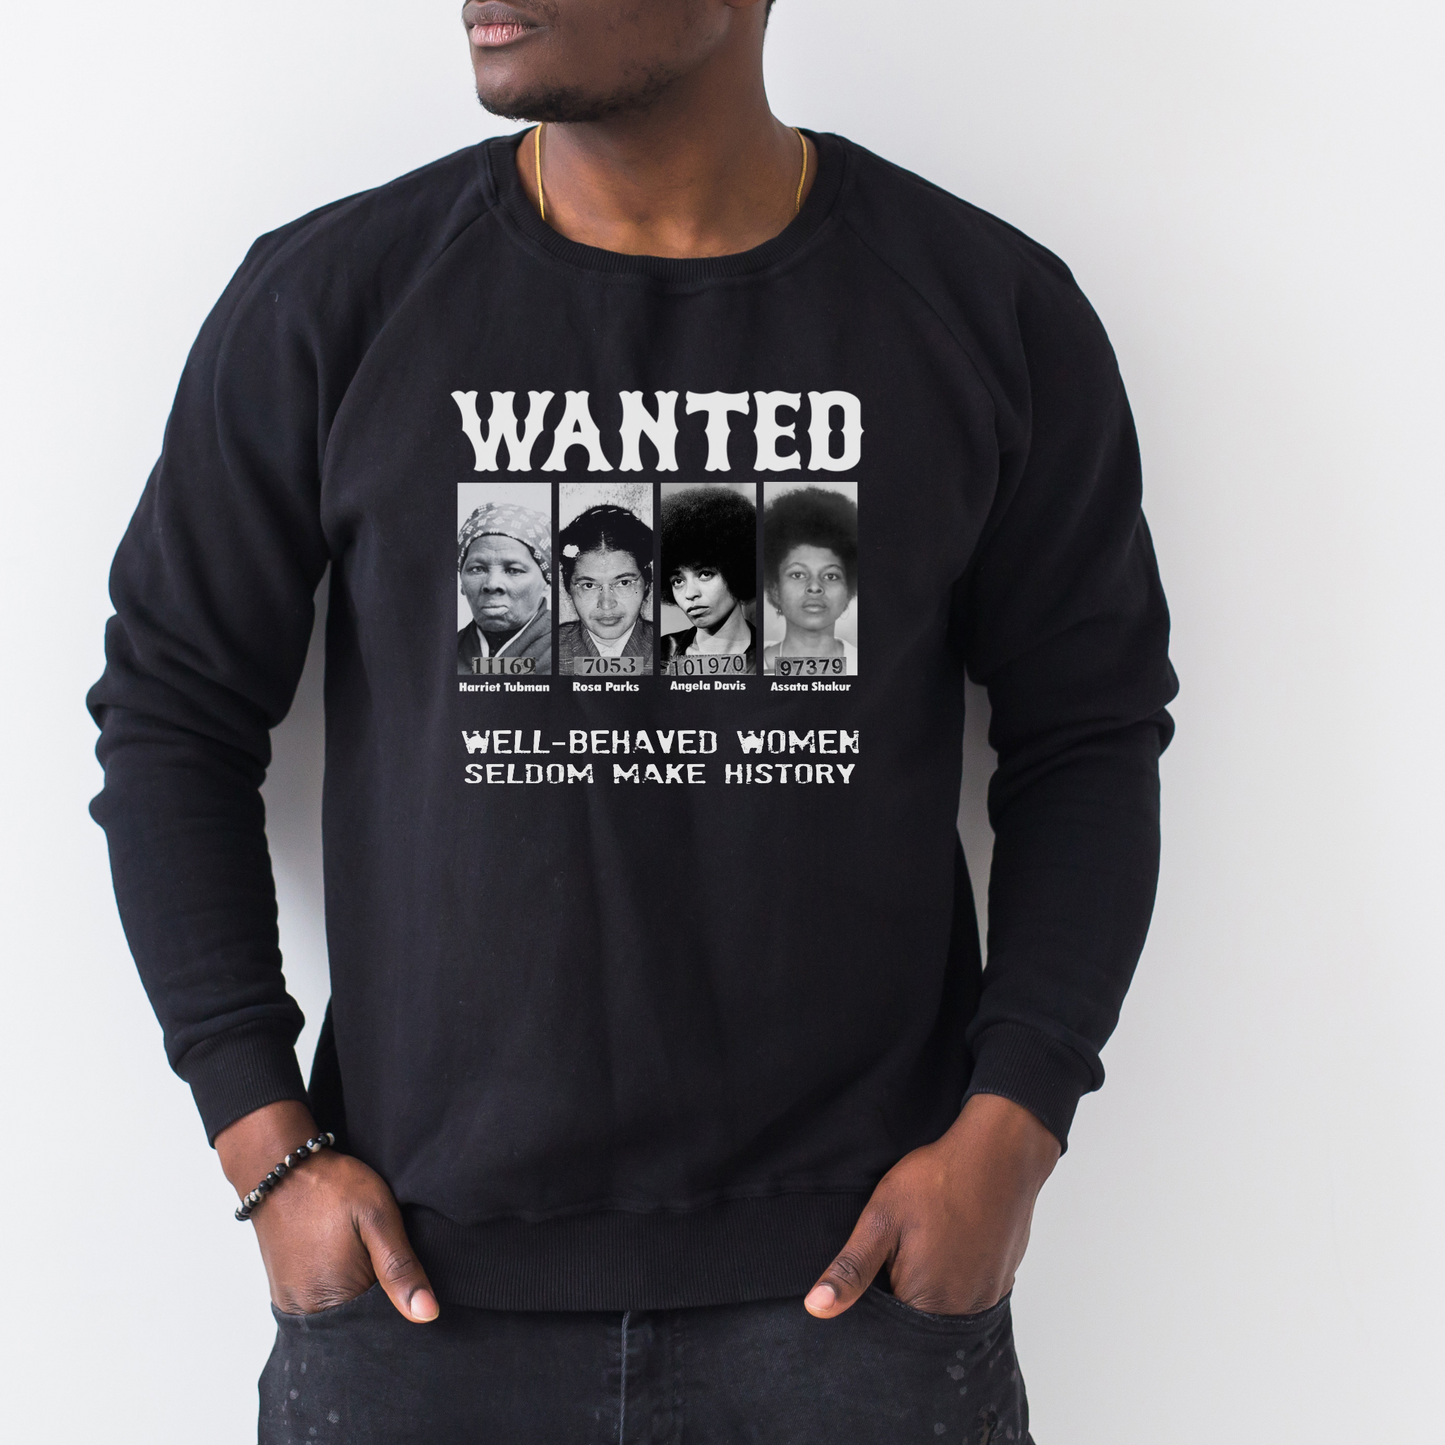 WANTED sweatshirt - LIMITED EDITION